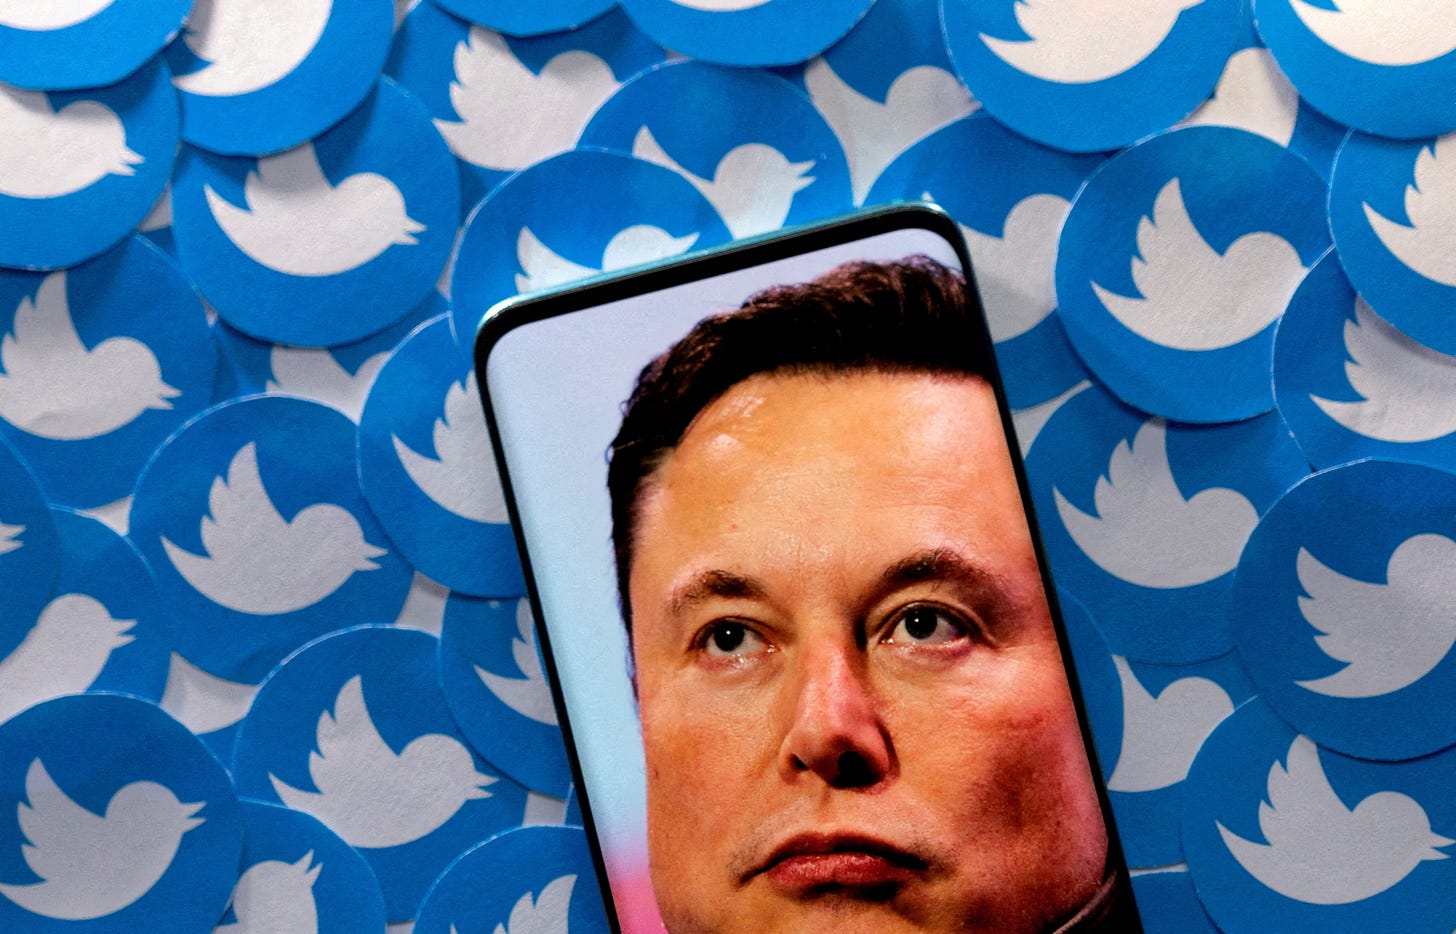 Elon Musk's team seeks new funding for Twitter, investor says | Reuters